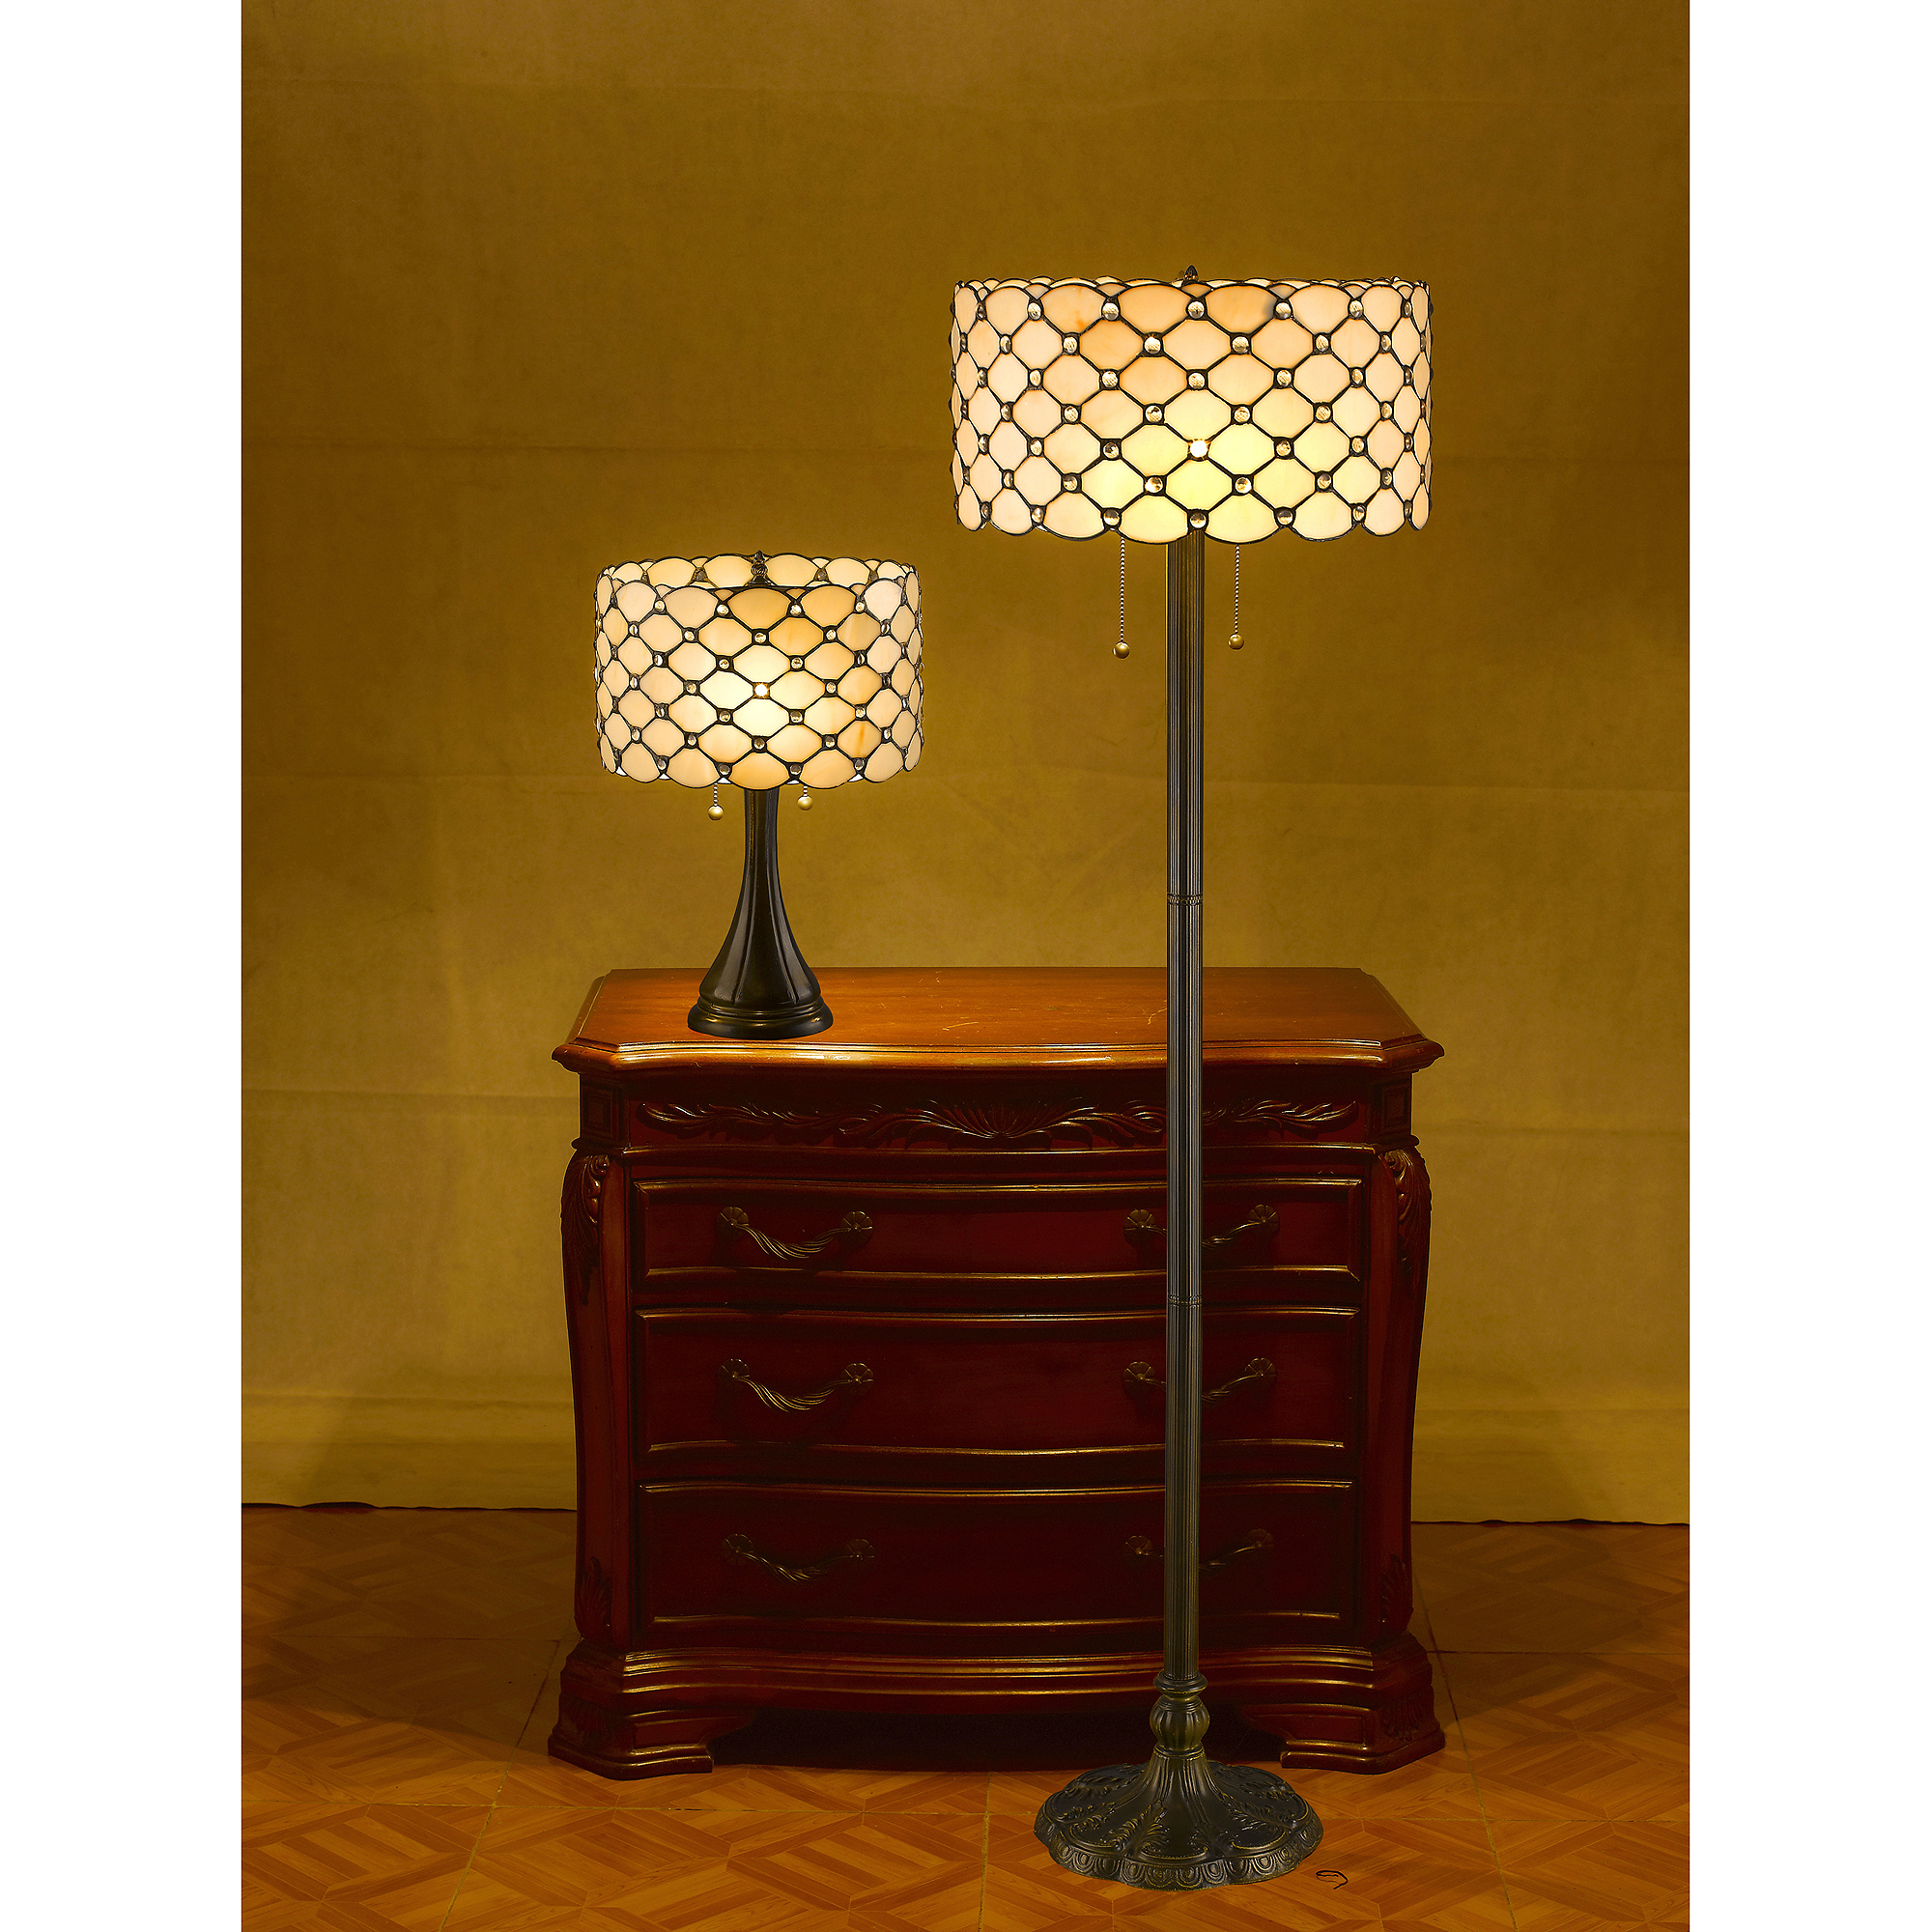 Serena Ditalia Jeweled Table And Floor Lamp Set Walmart pertaining to sizing 2000 X 2000